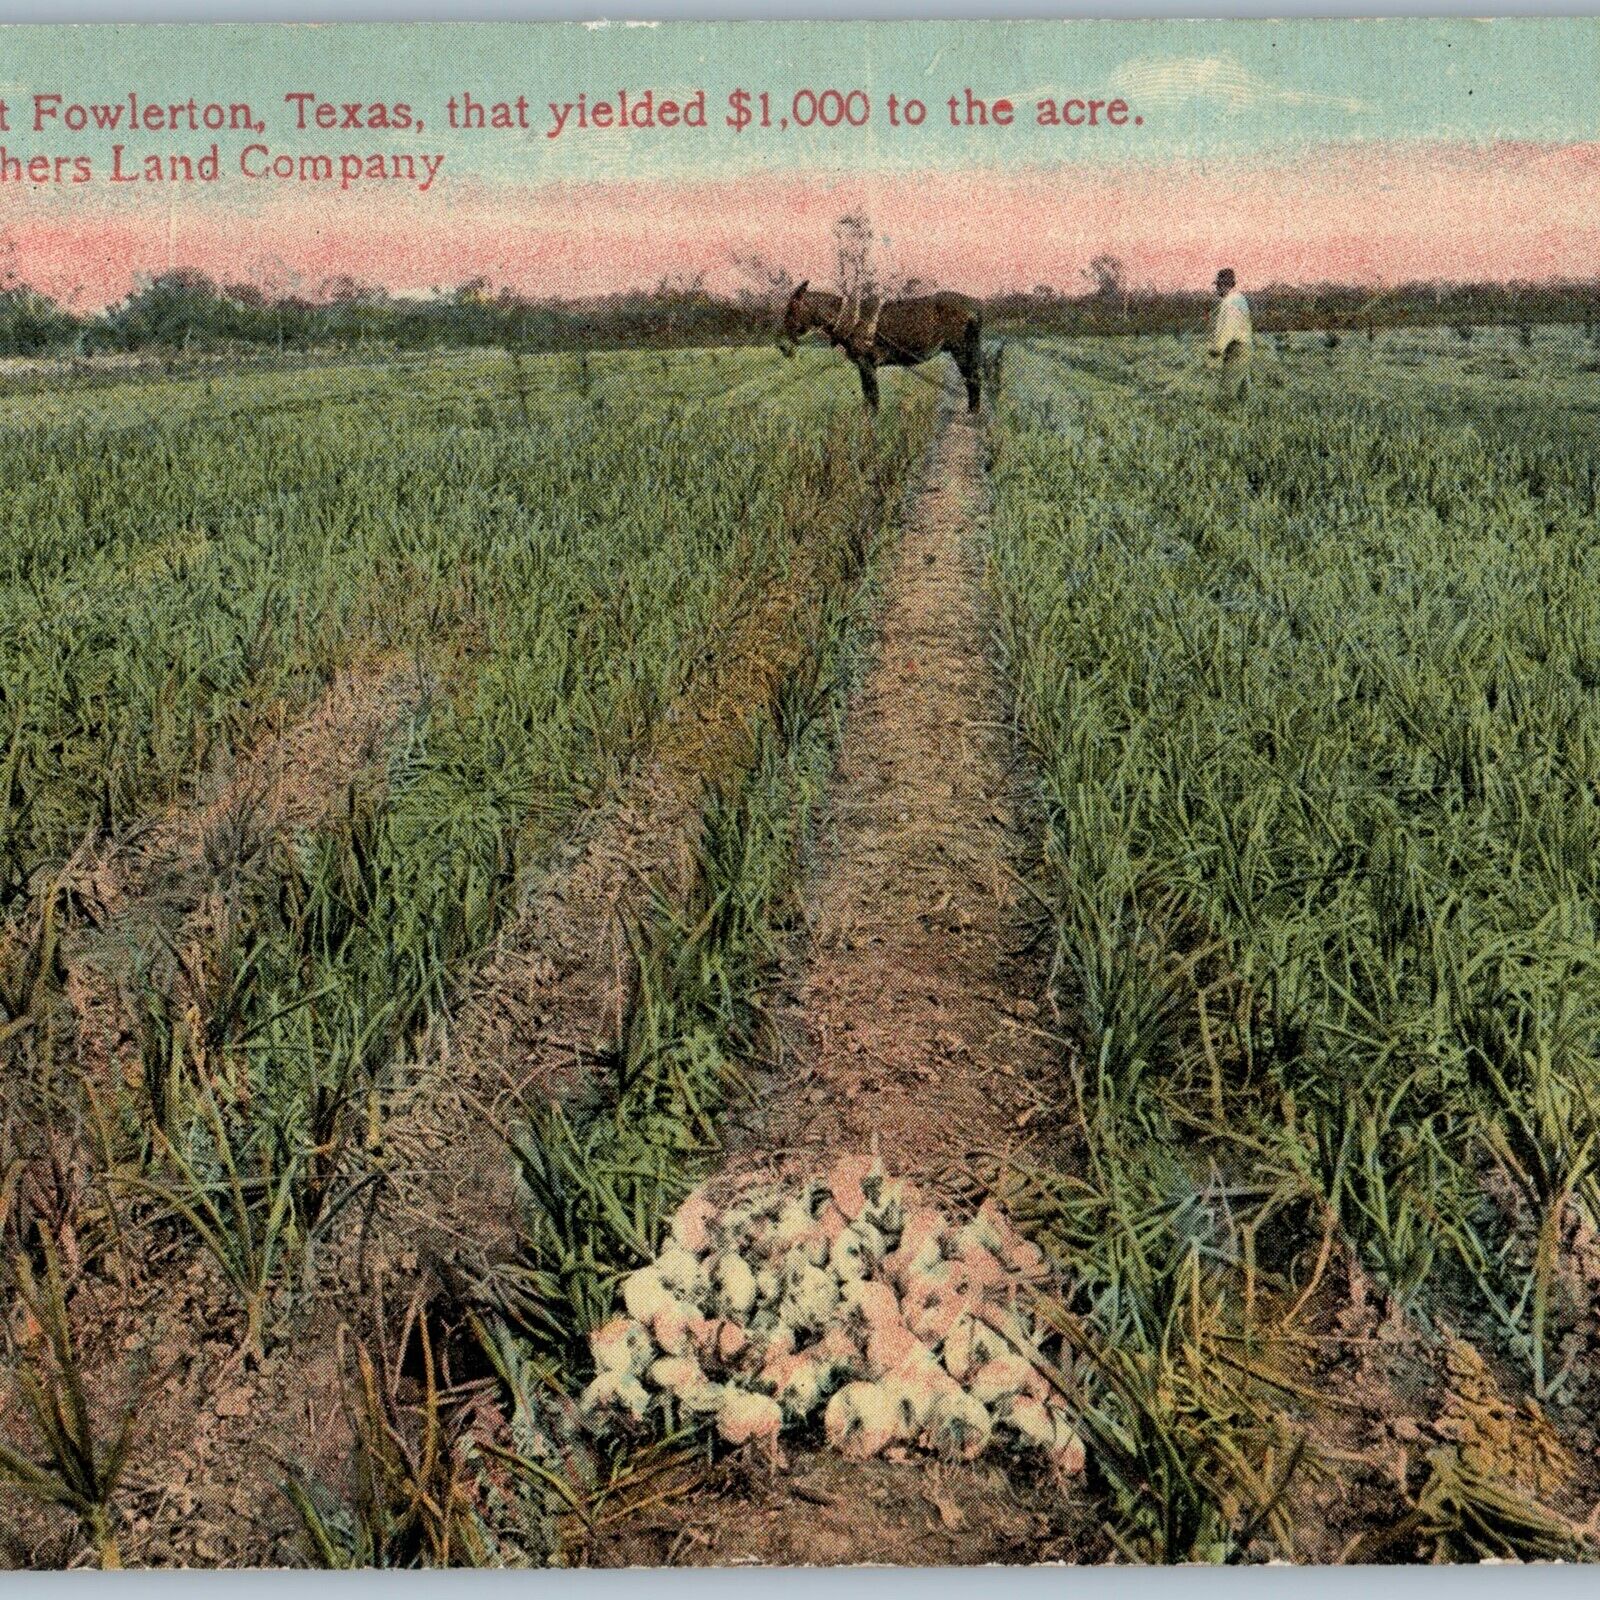 c1910s Fowlerton, TX Onion Farm Field Fowler Brothers Land Co $1000 Profit A190